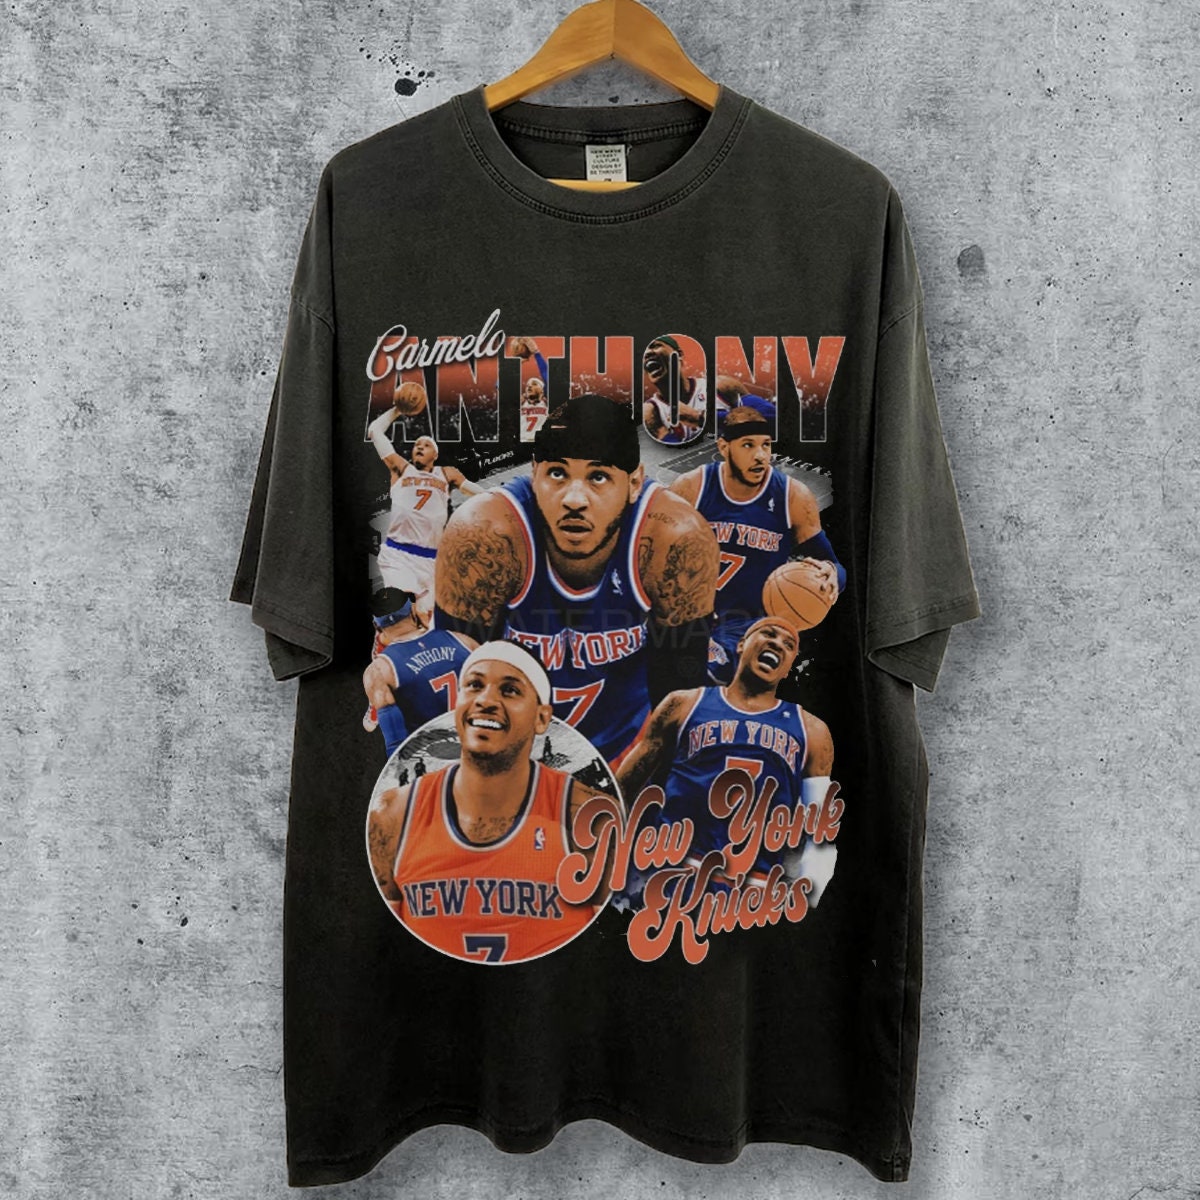 bobonskt Carmelo Anthony Long Sleeve T-Shirt